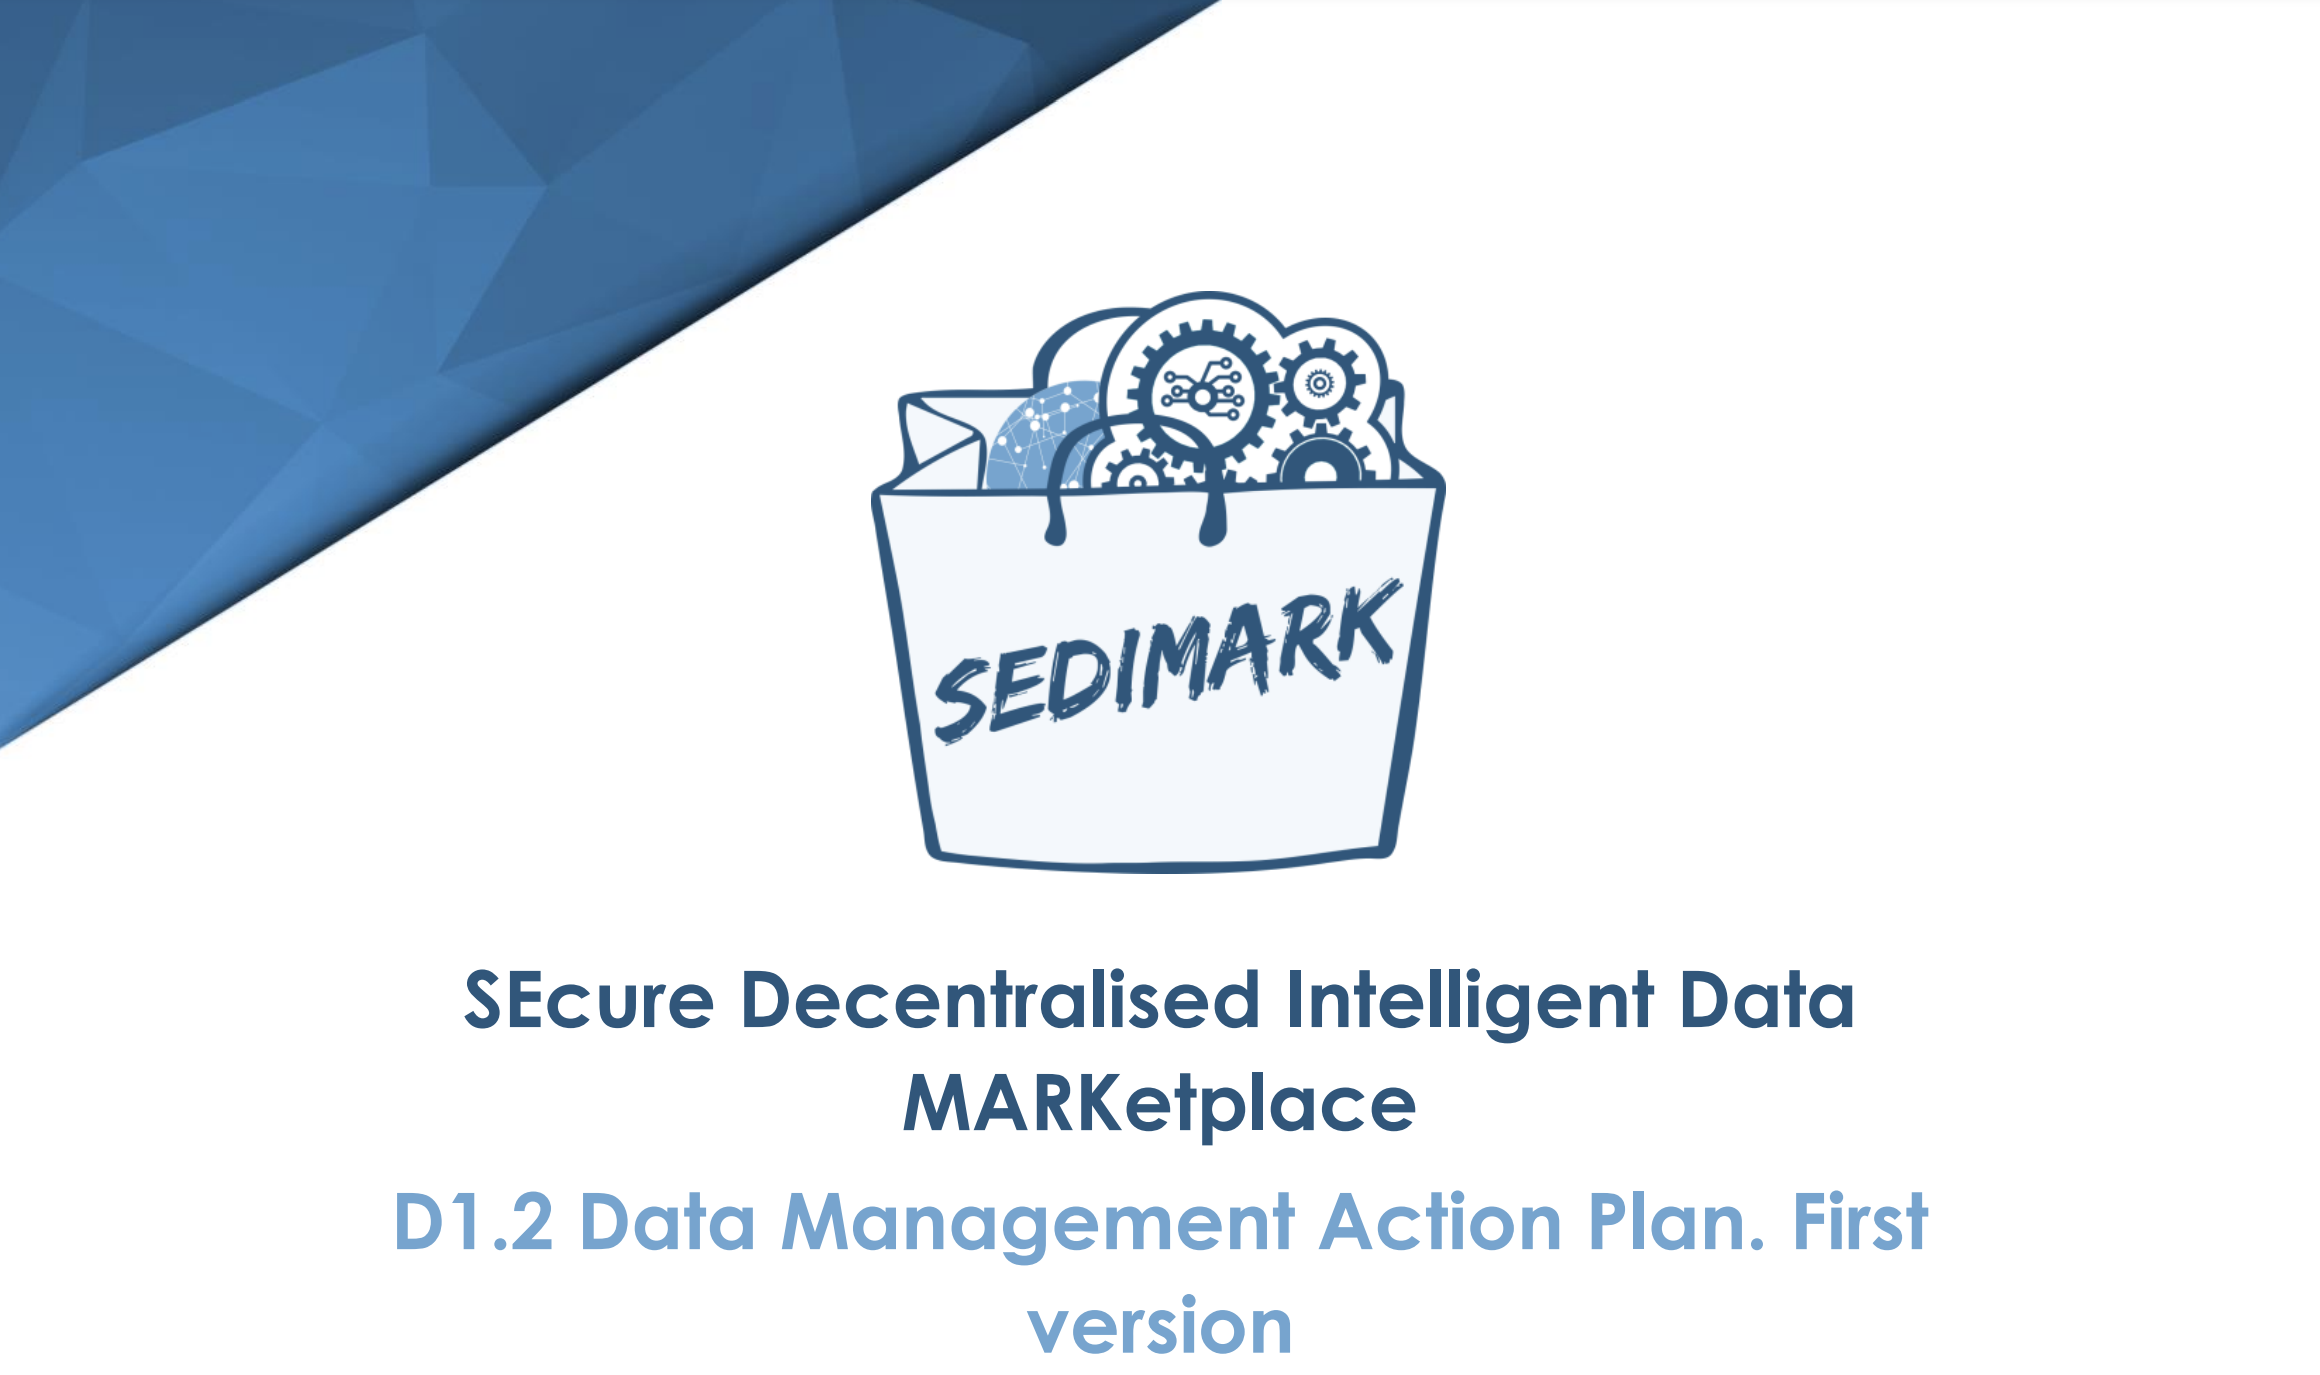 D1.2 - Data Management Action Plan. First version